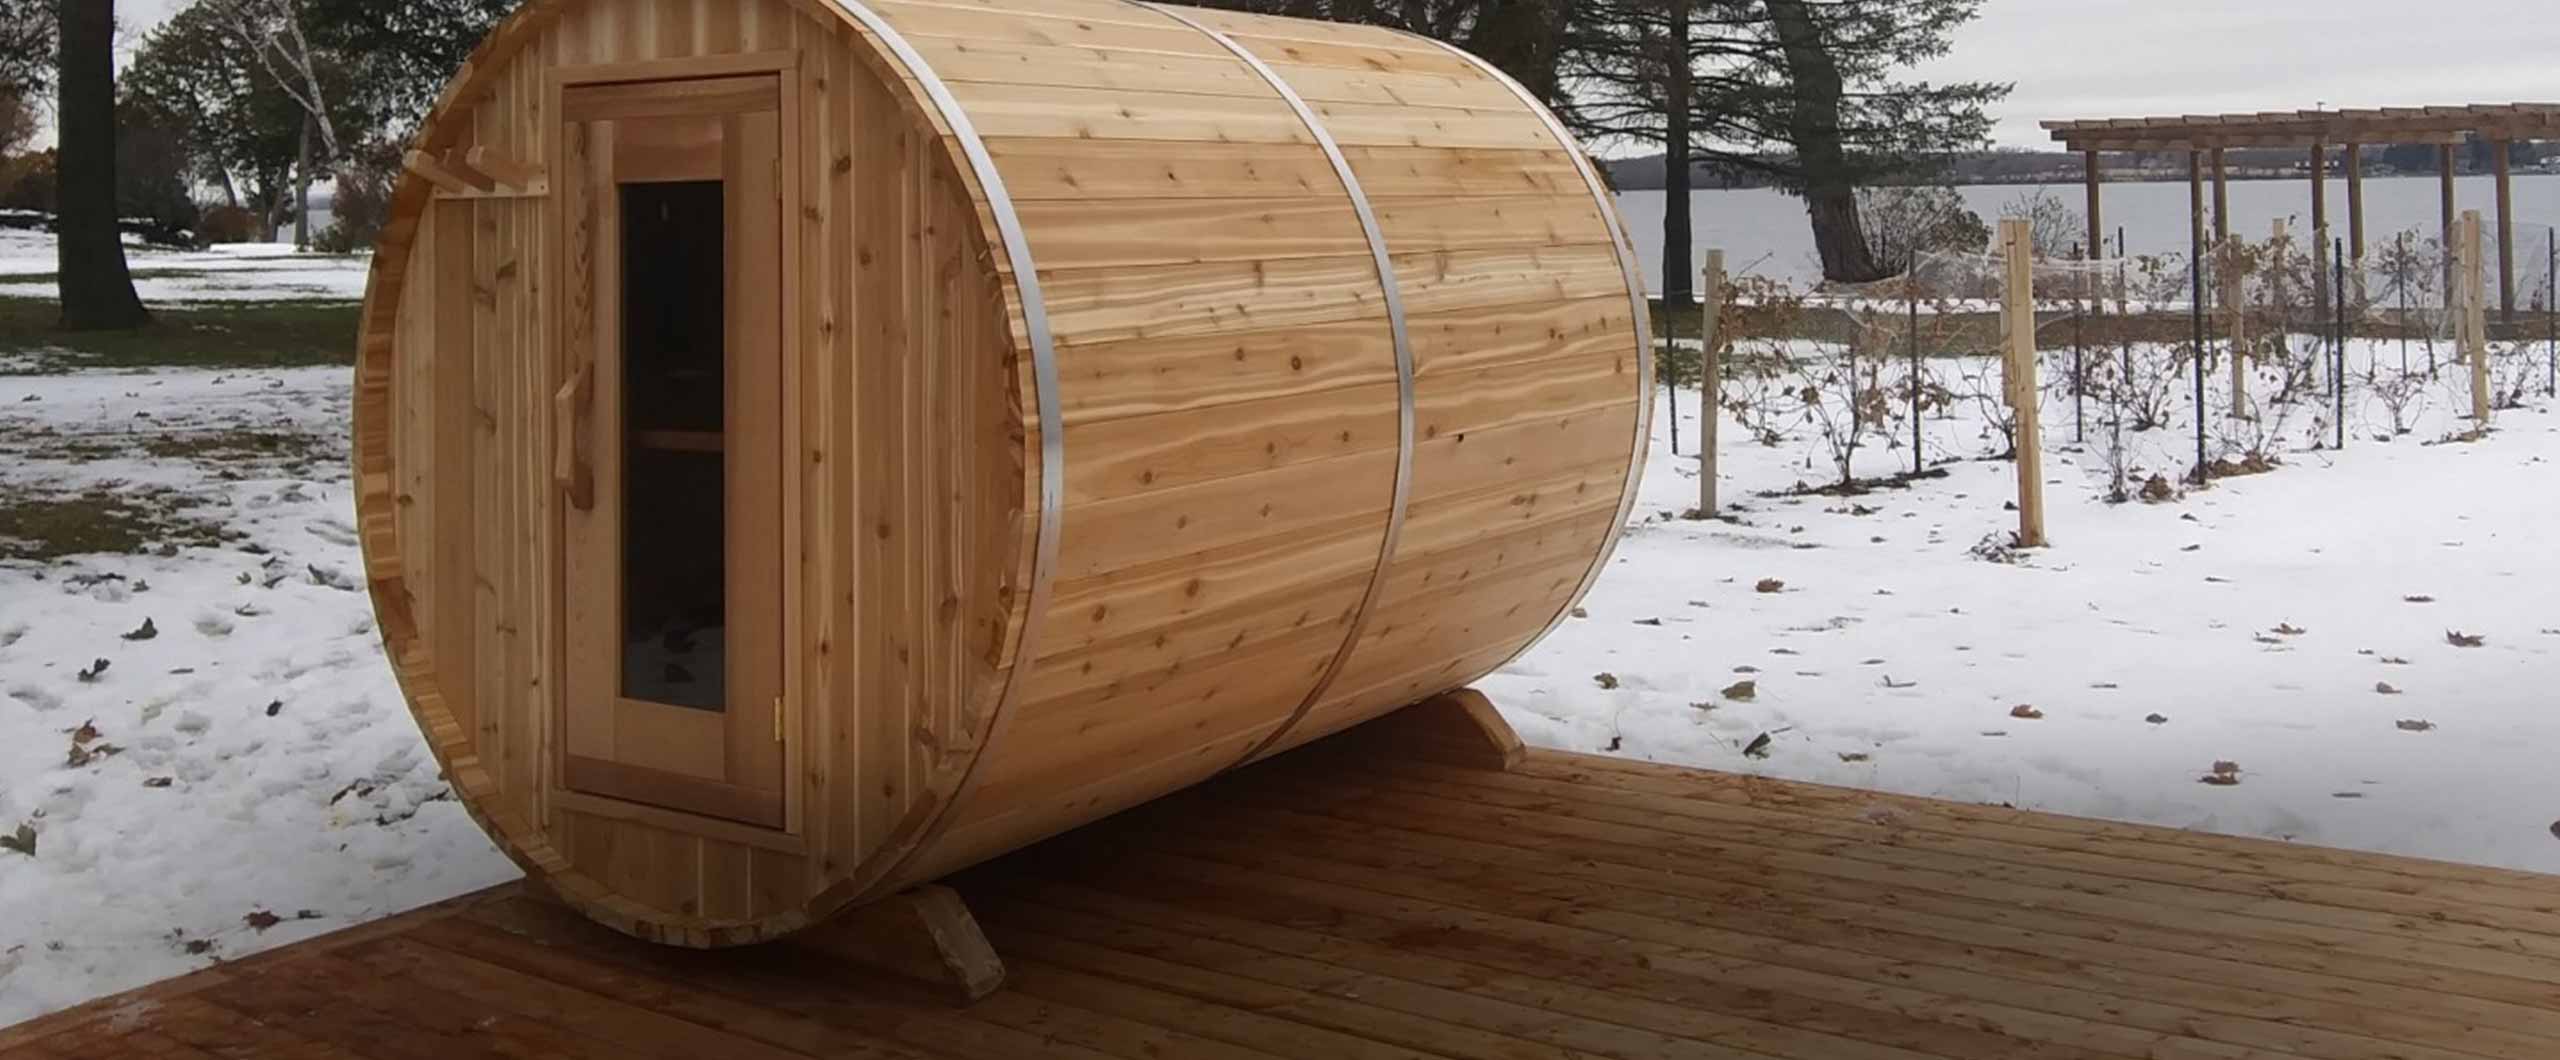 Acadia sauna